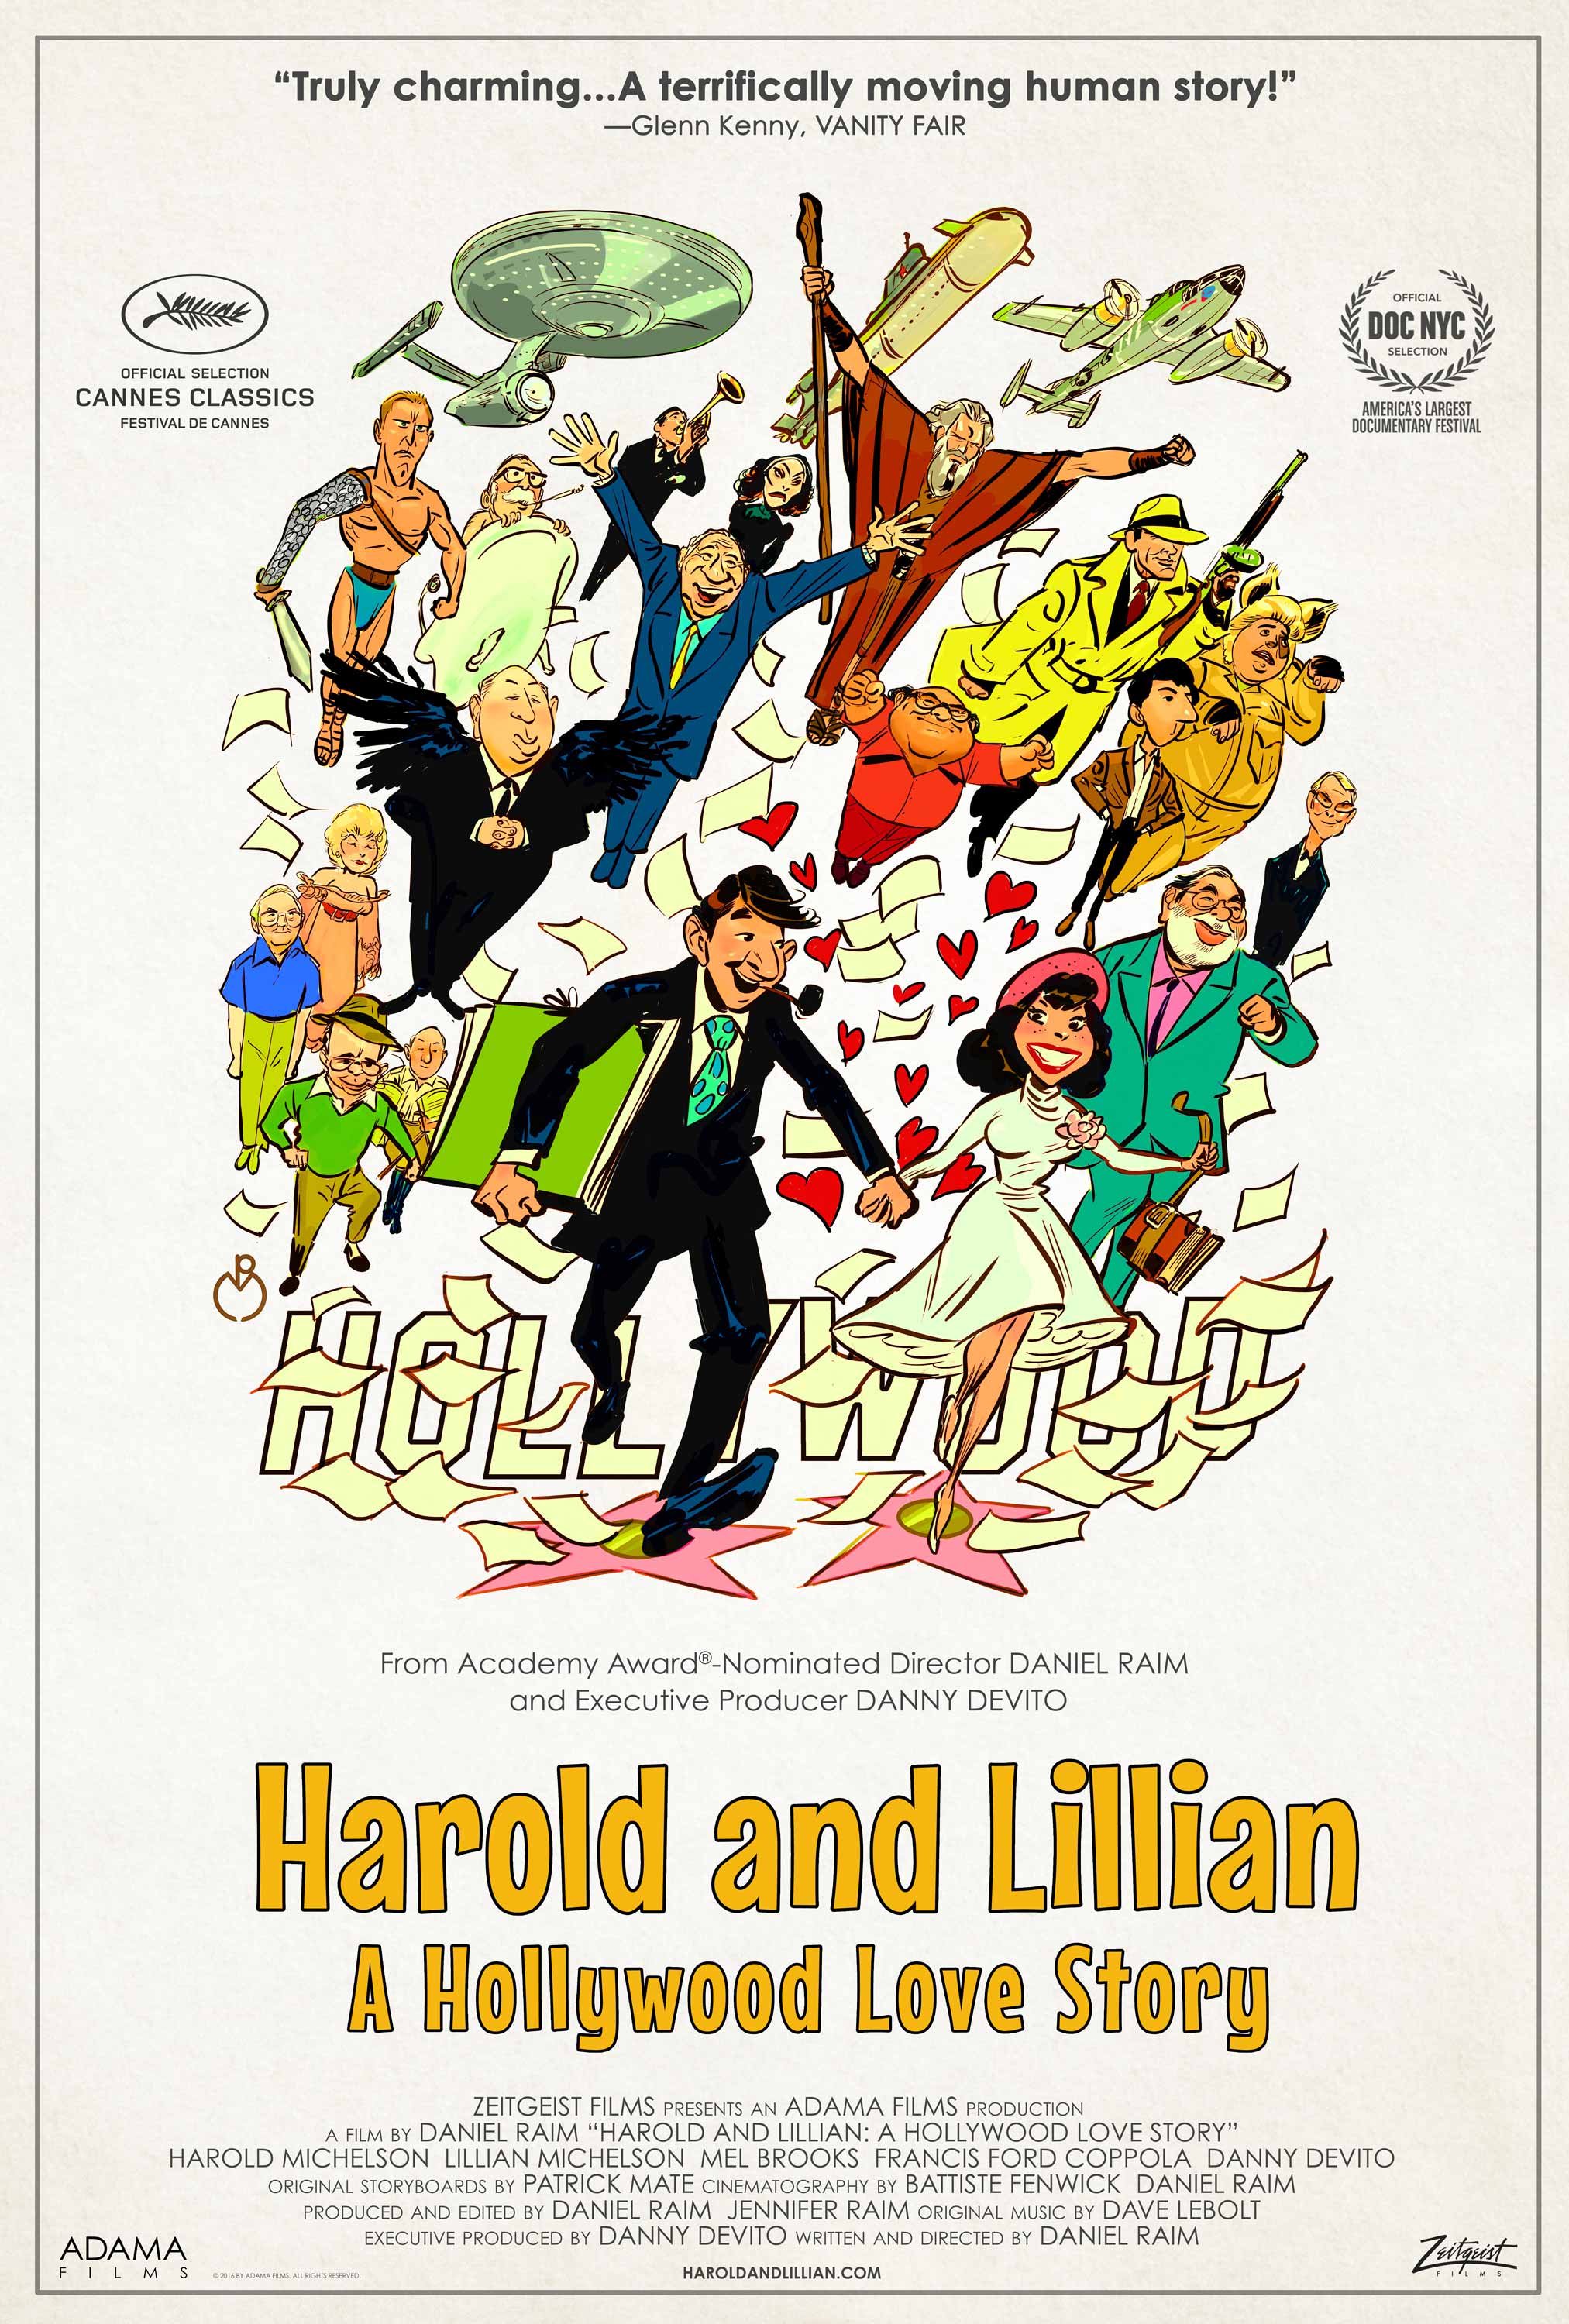 HAROLD AND LILLIAN: A HOLLYWOOD LOVE STORY   (USA)